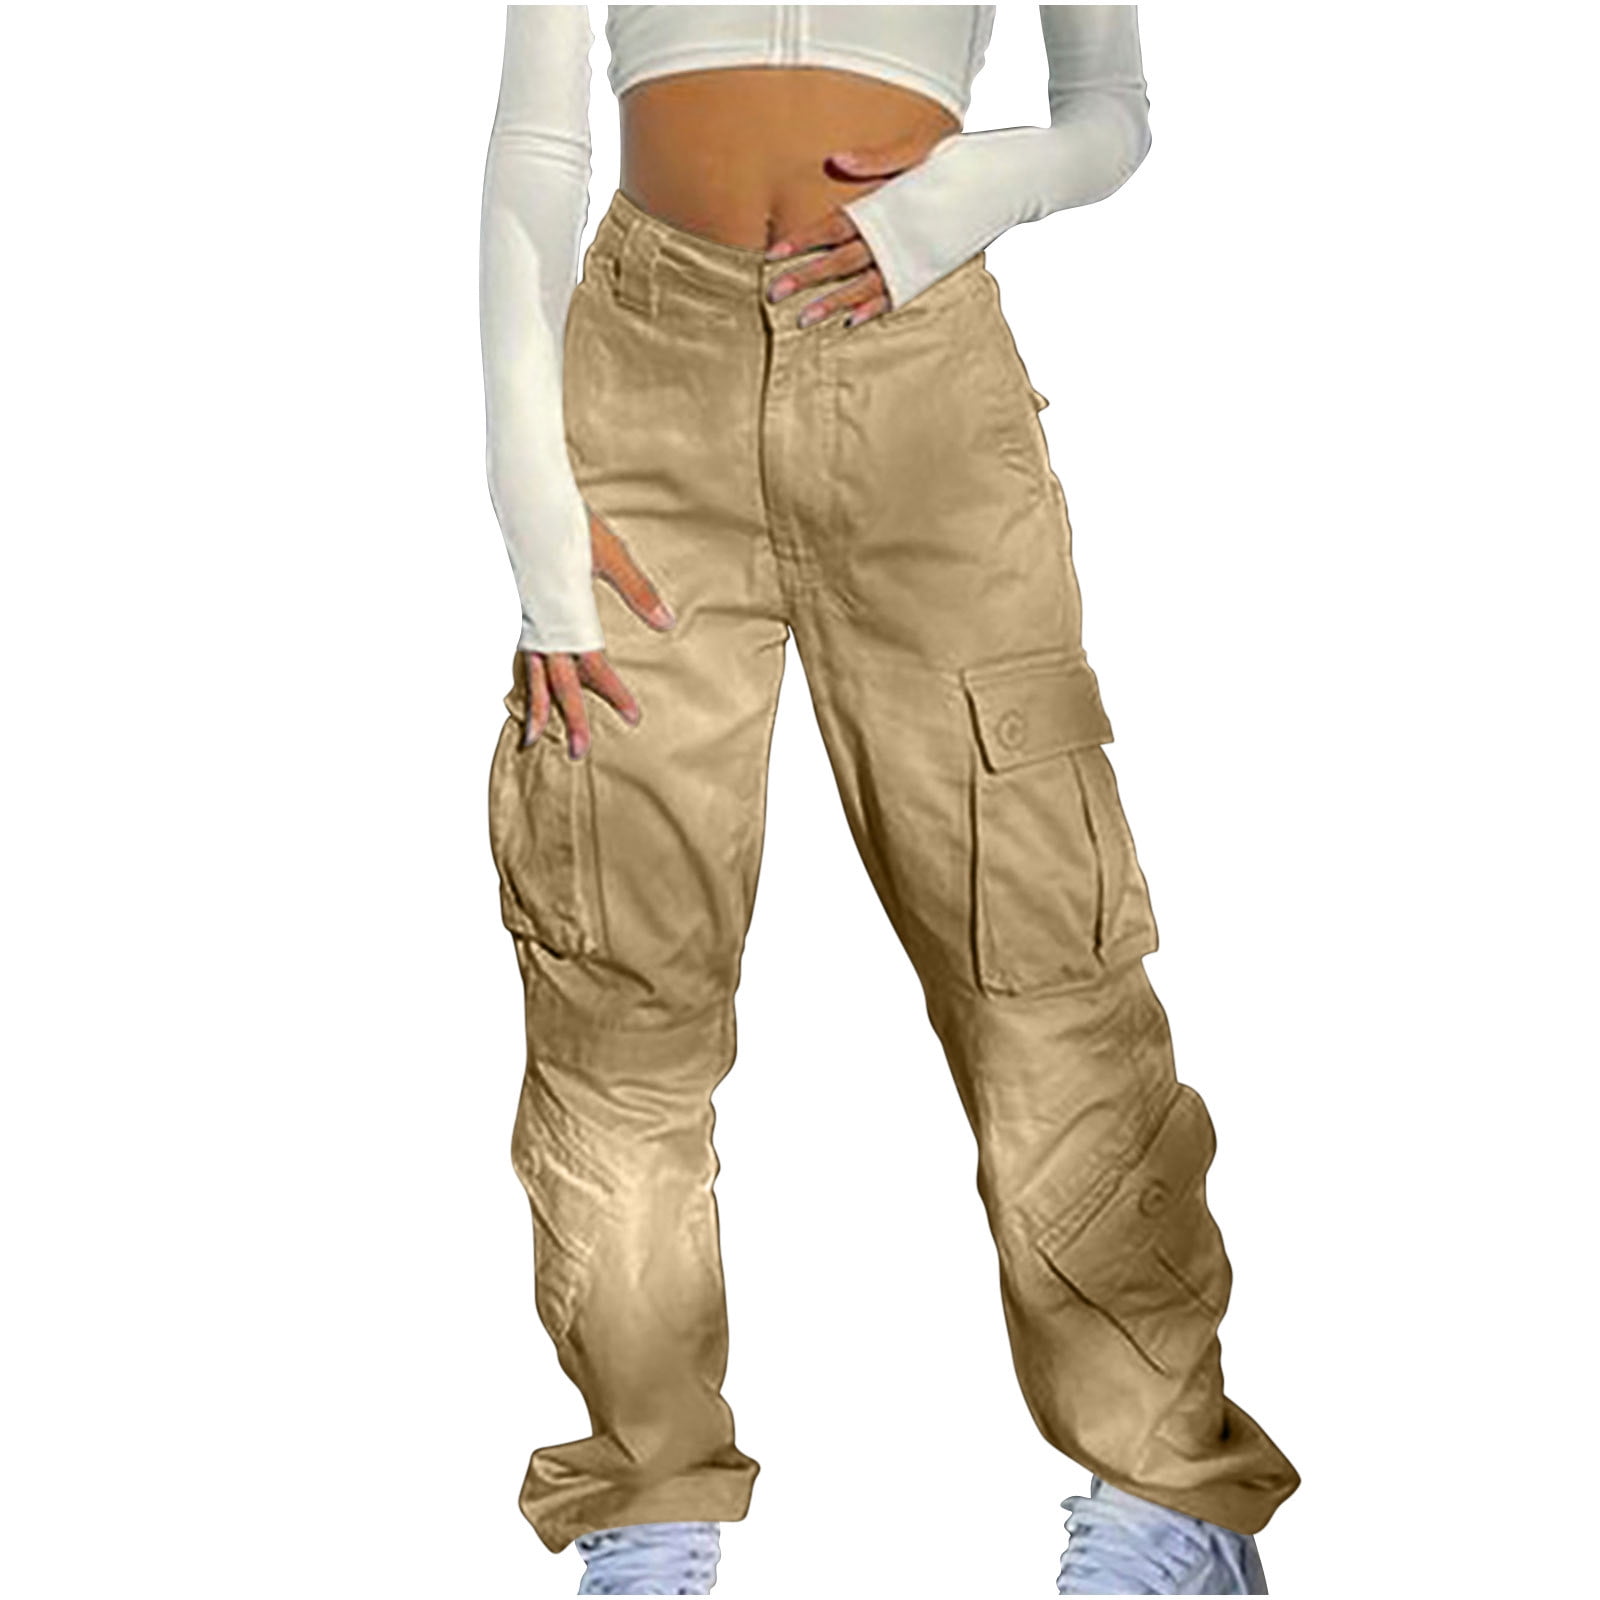 NWT Refuge Ladies Size 4 Skin Tight Legging Jeans Khaki Color 5 Pockets NEW  | eBay